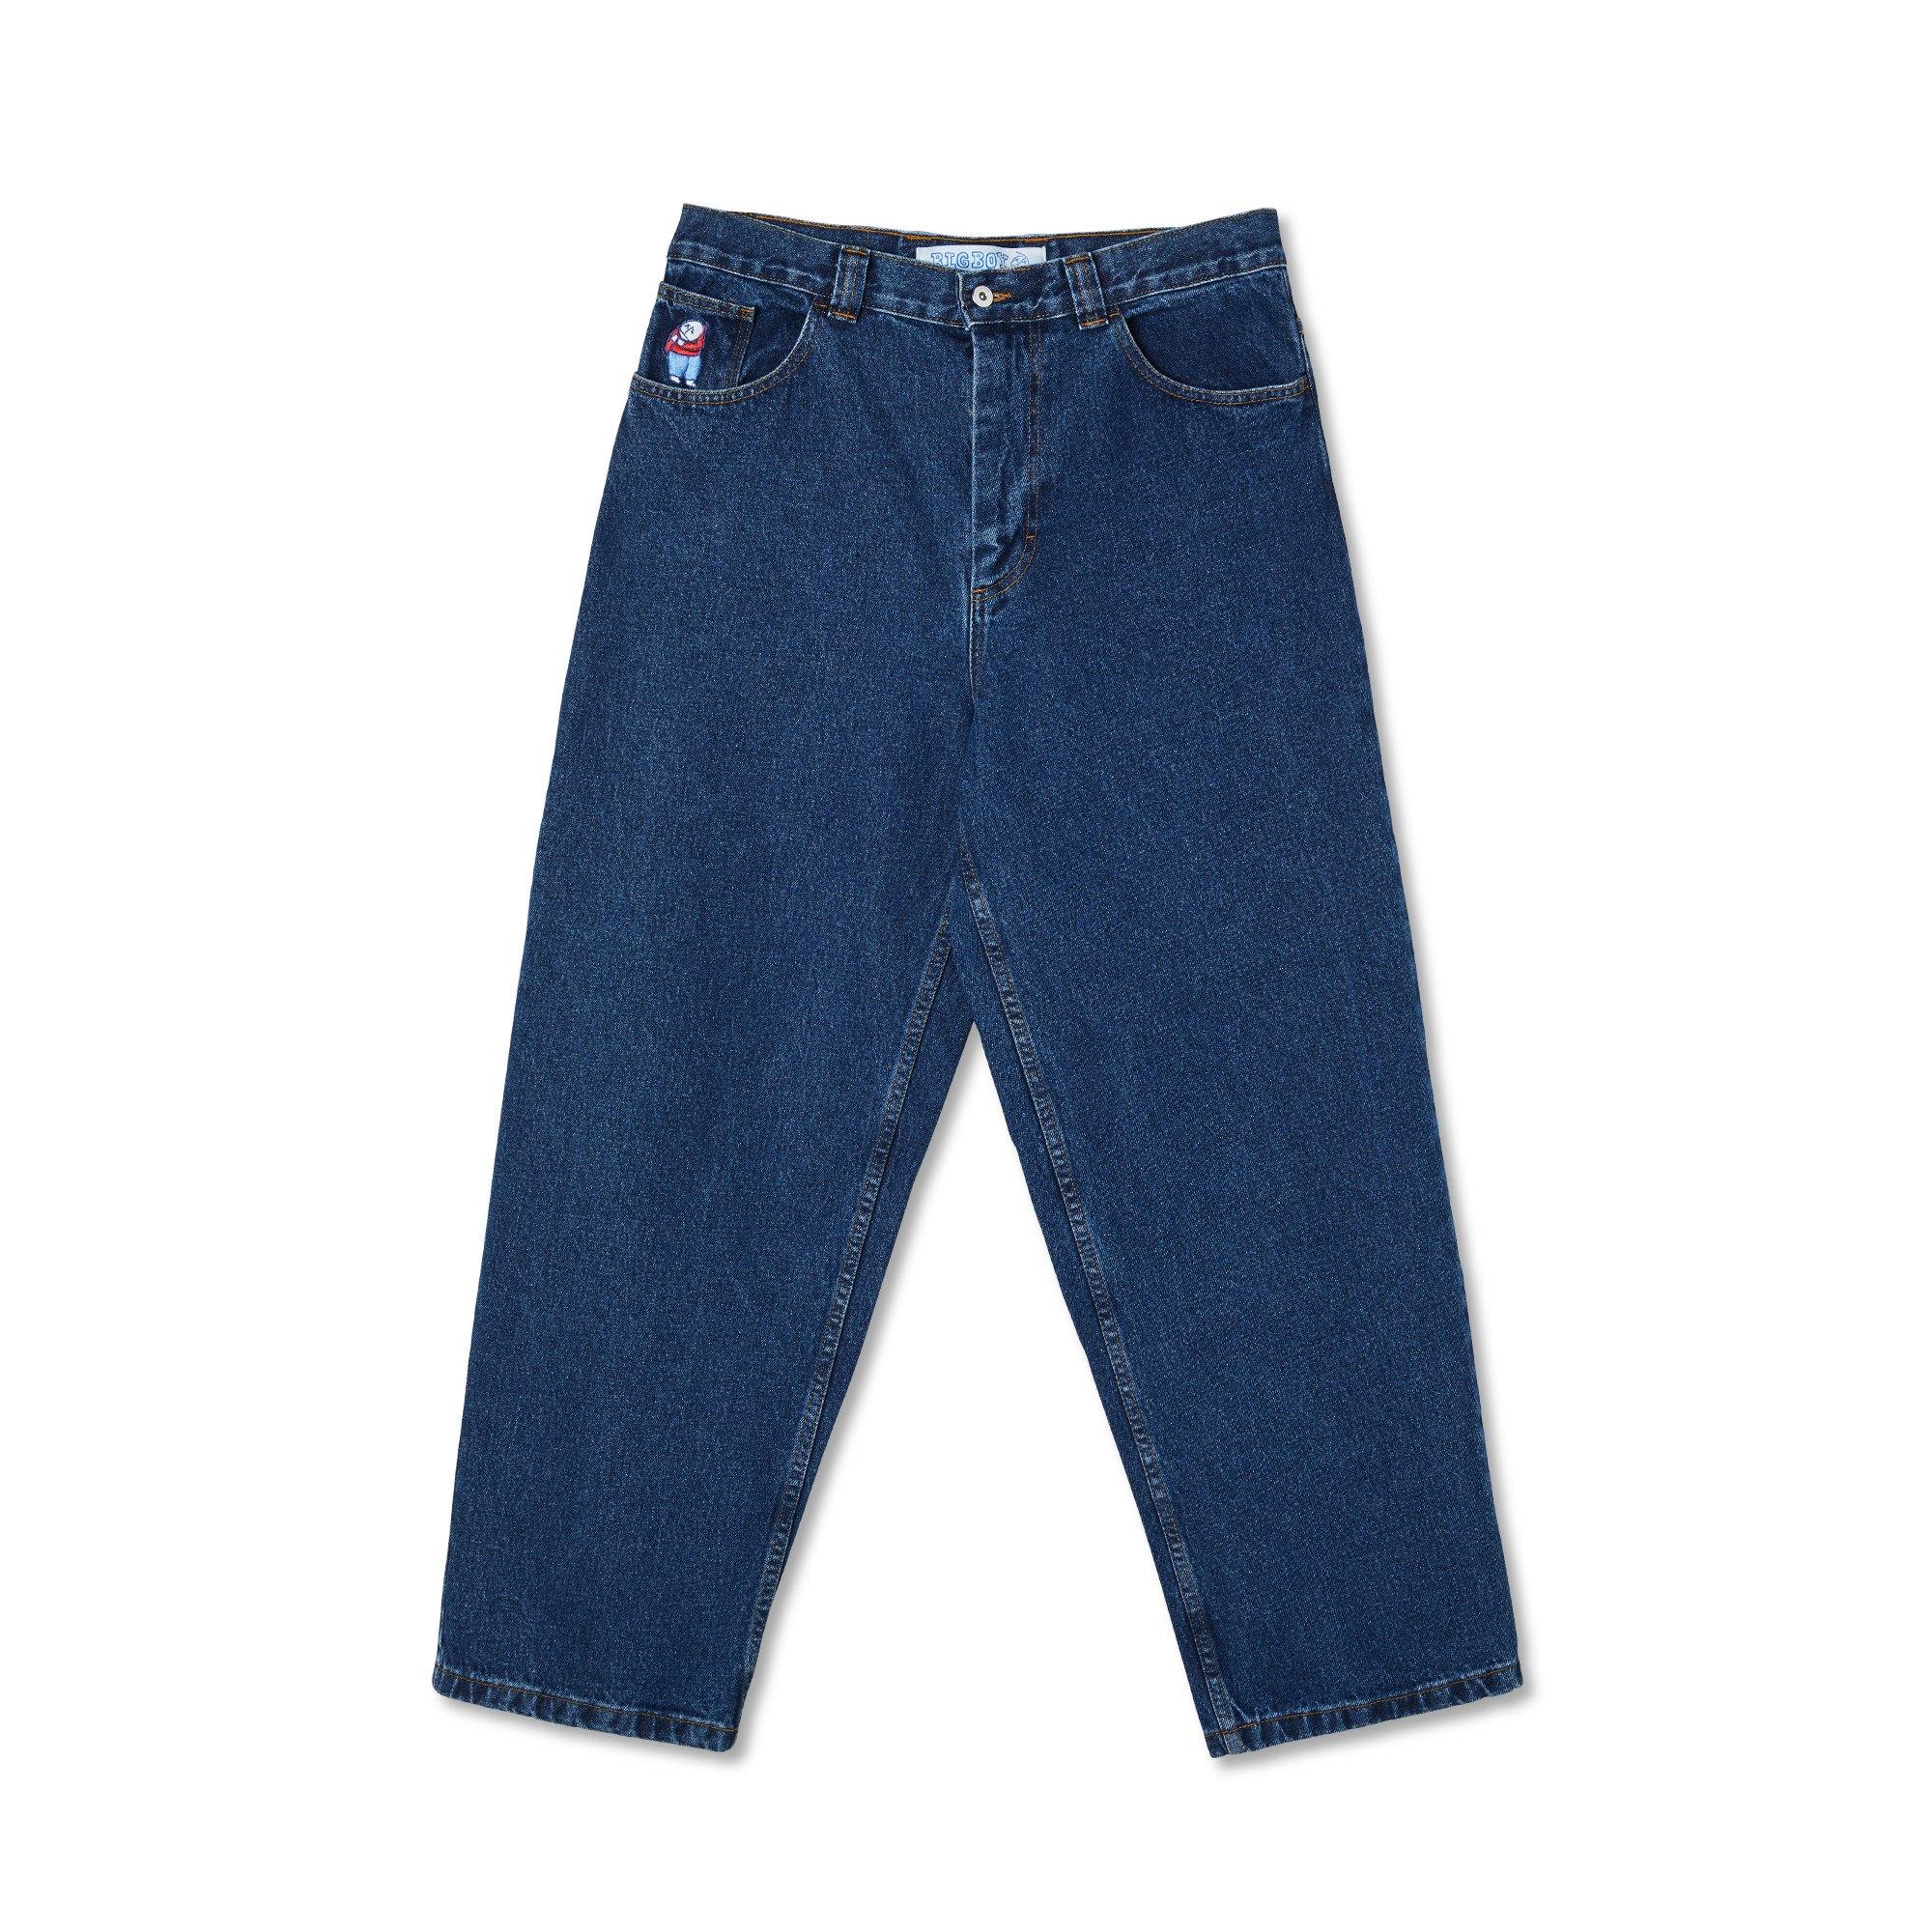 Pantalon POLAR Big Boy Jeans Dark Blue - Bleu Foncé - SUBIACO SKATESHOP